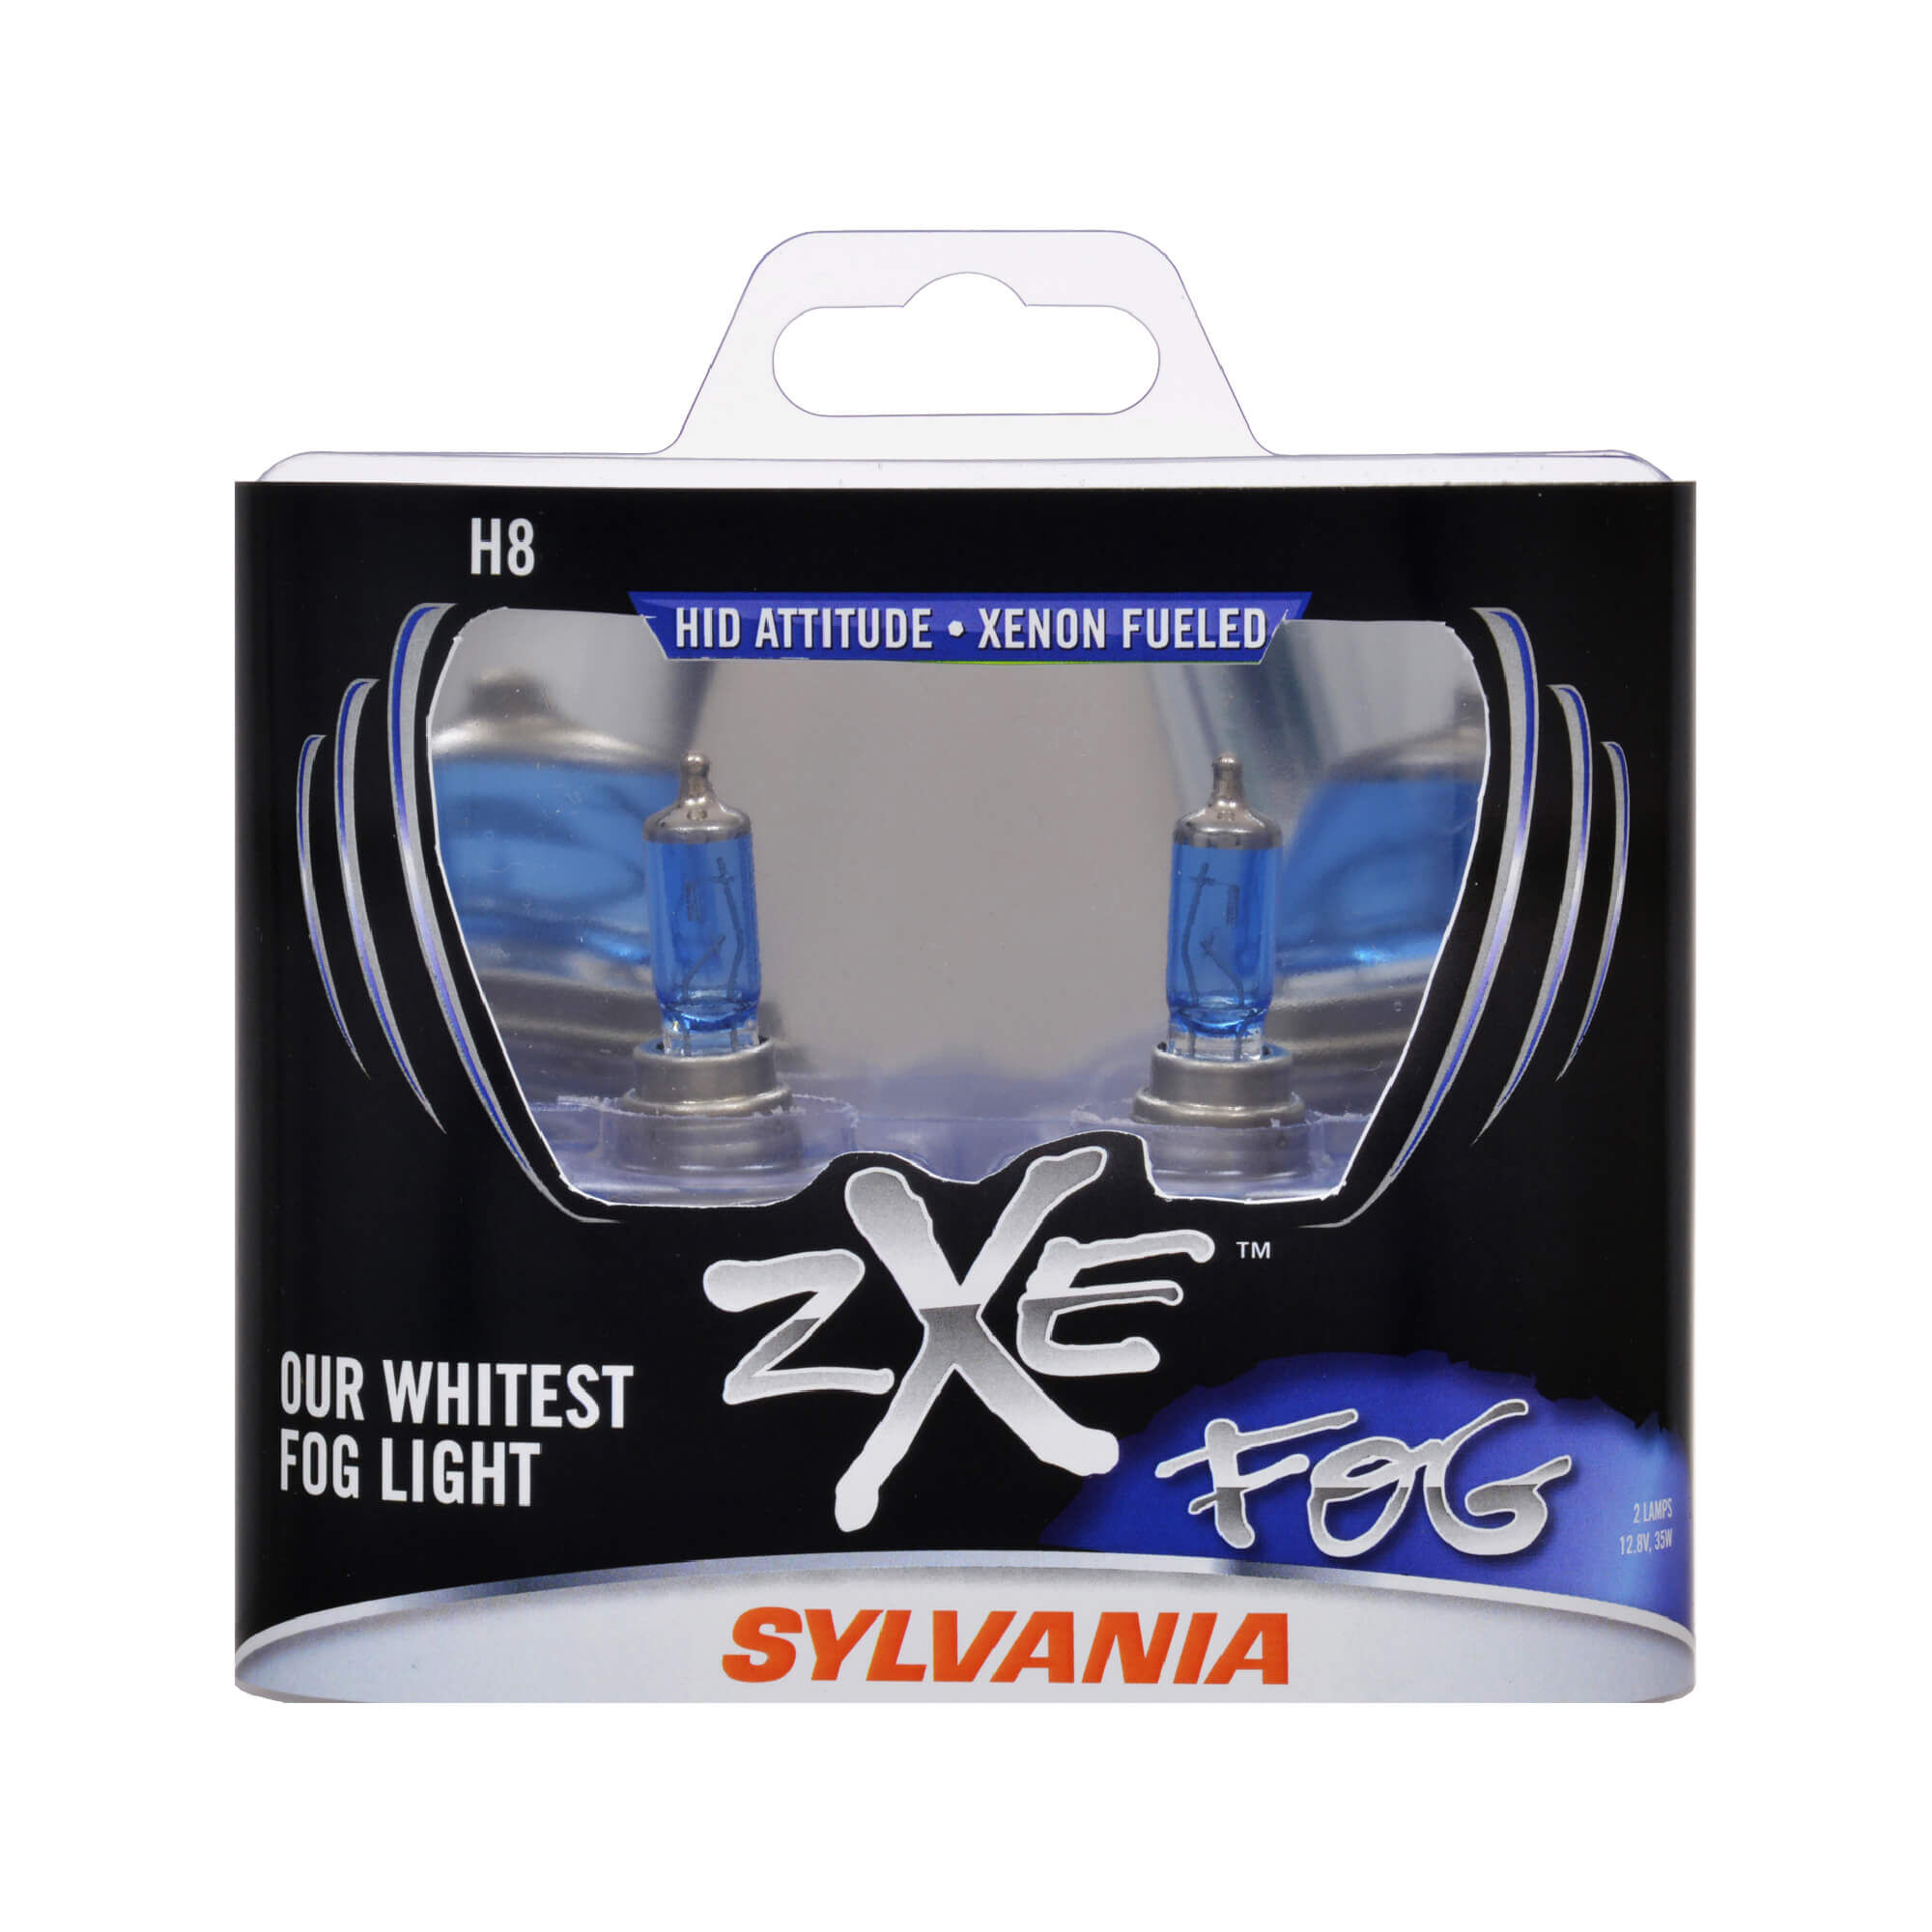 SYLVANIA H8 SilverStar zXe Halogen Fog Bulb, 2 Pack